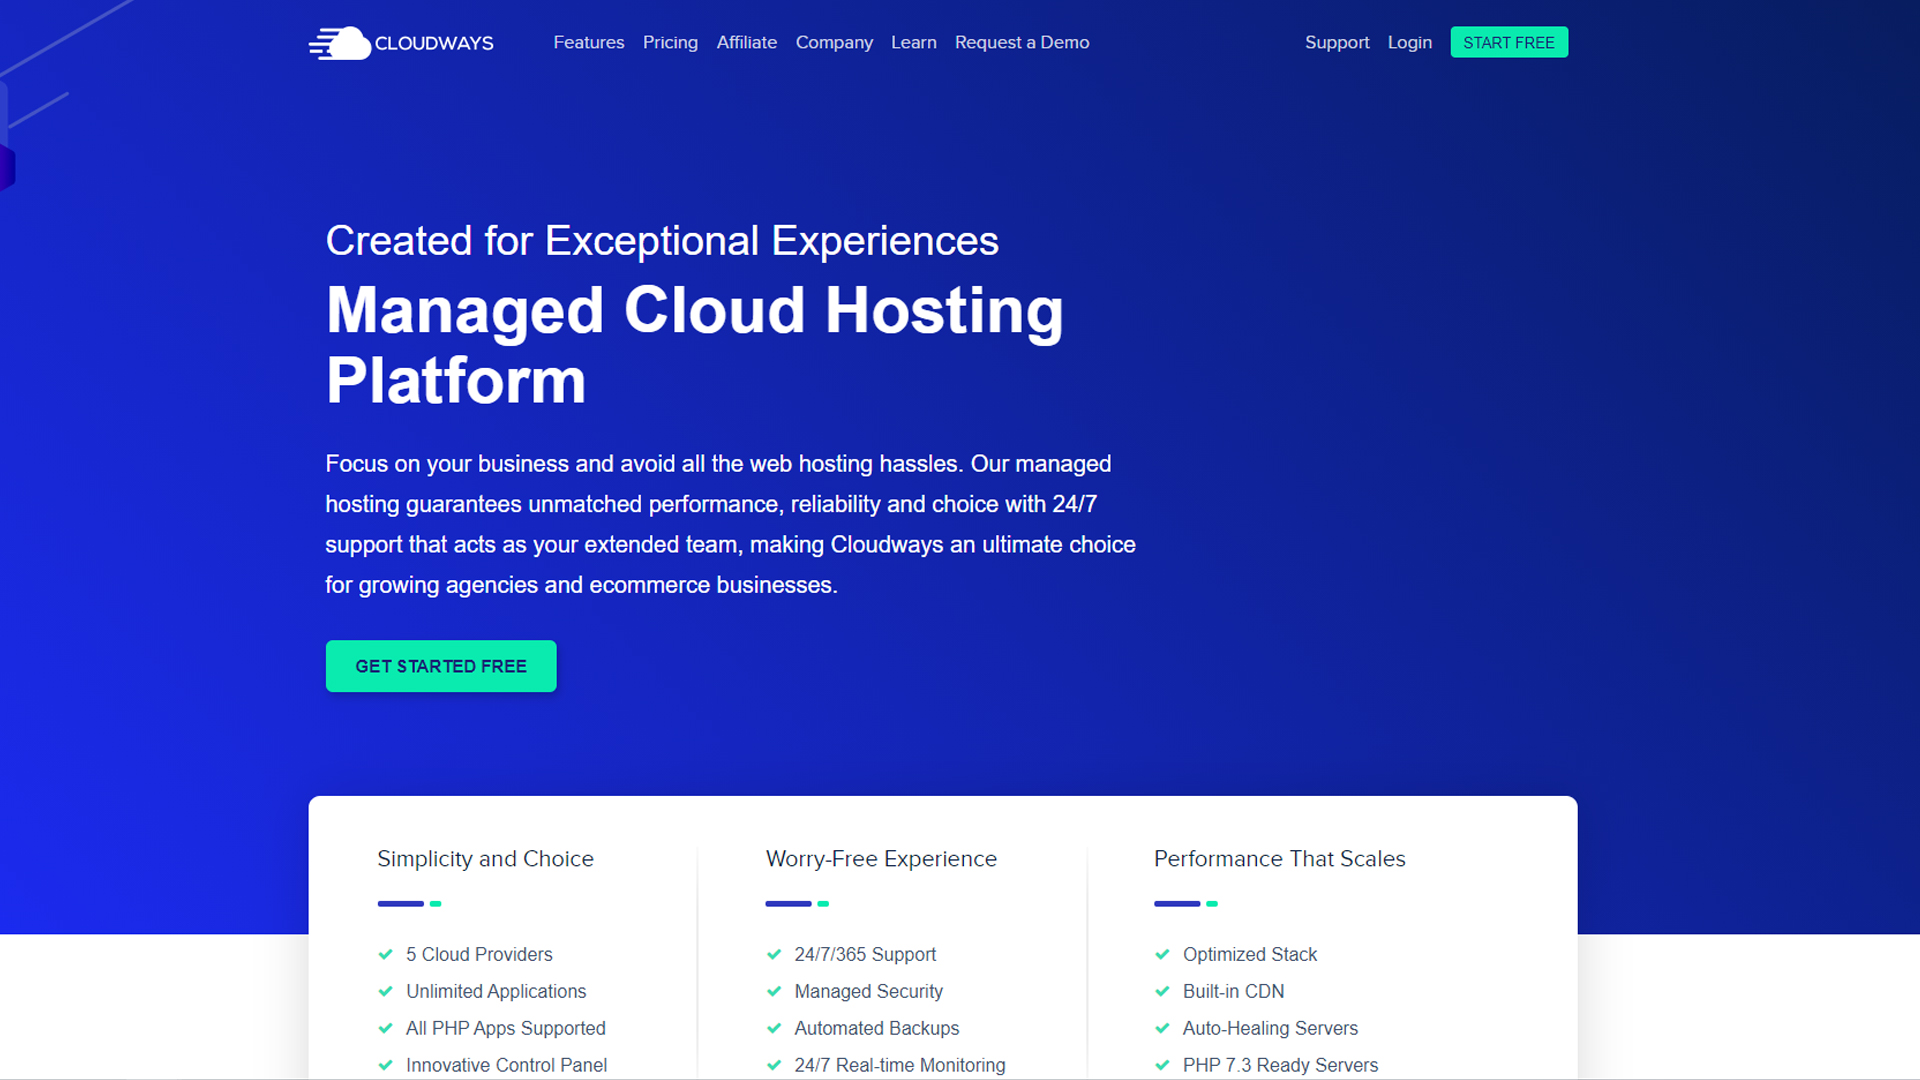 Cloudways' homepage